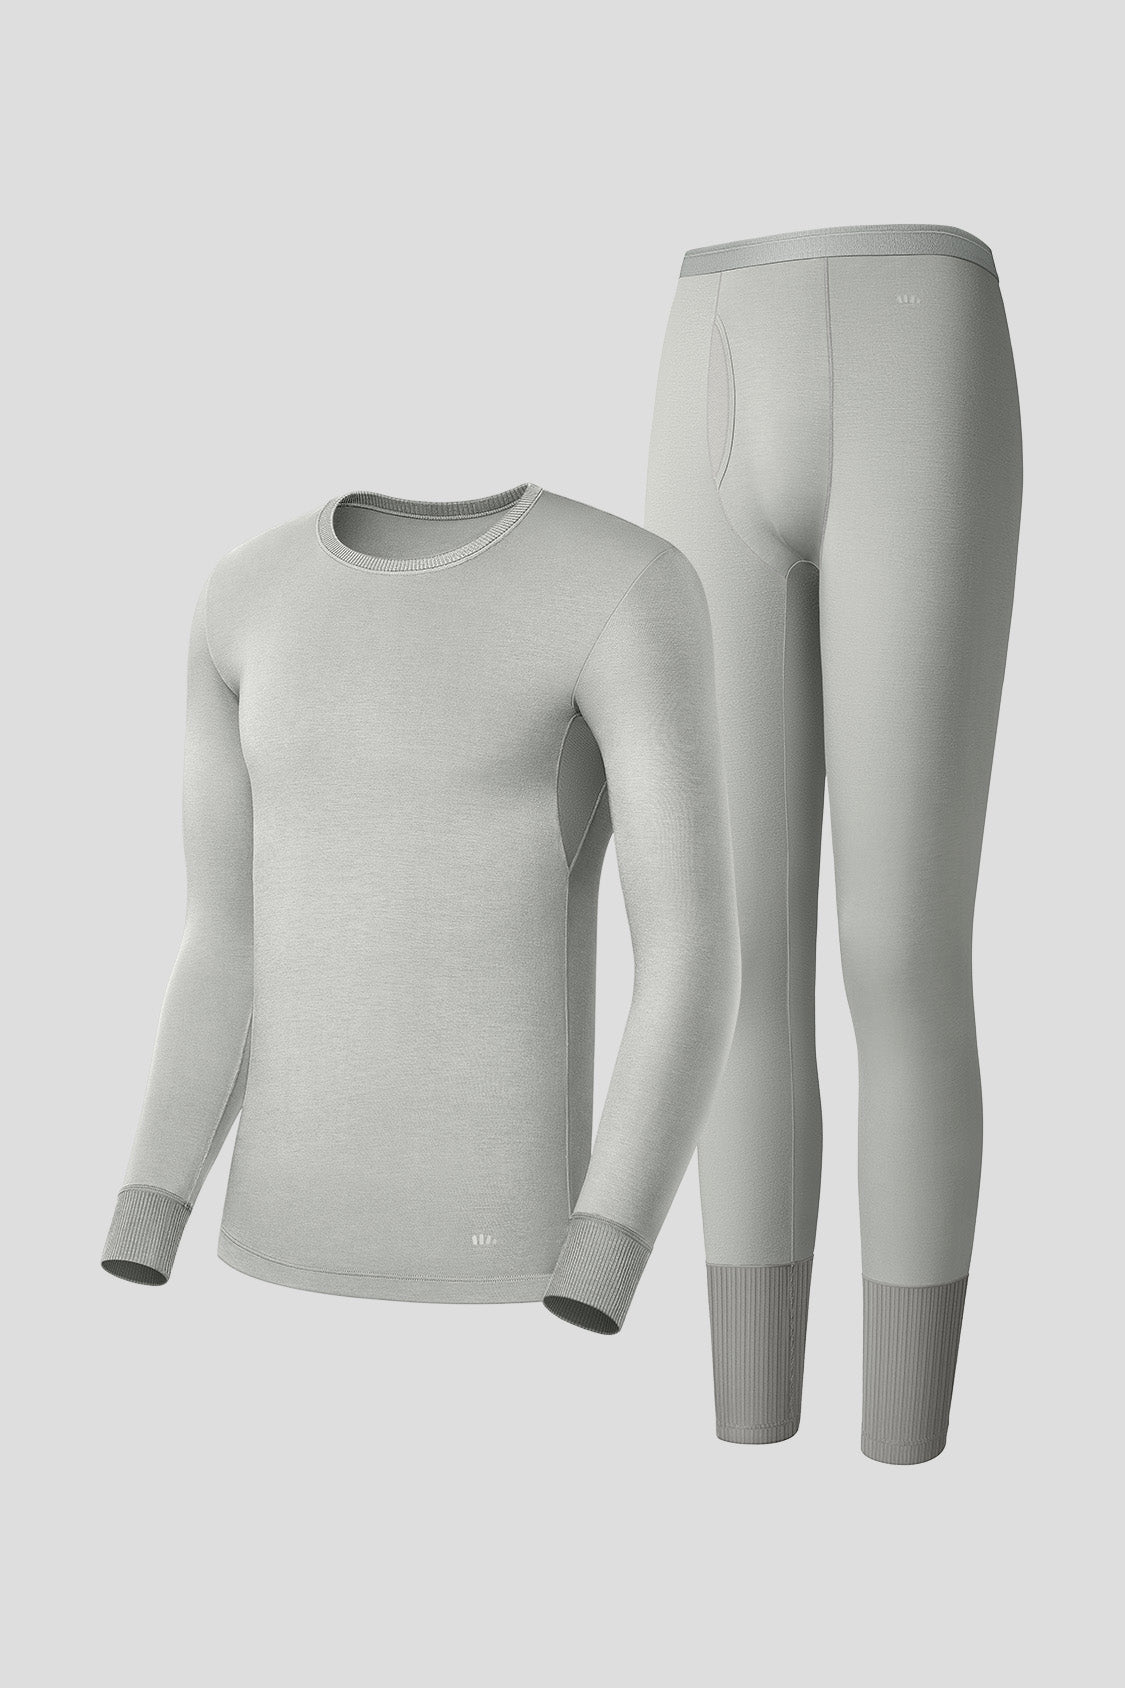 beneunder men's skin-sensitive low-key warm underwear set #color_starlit gray